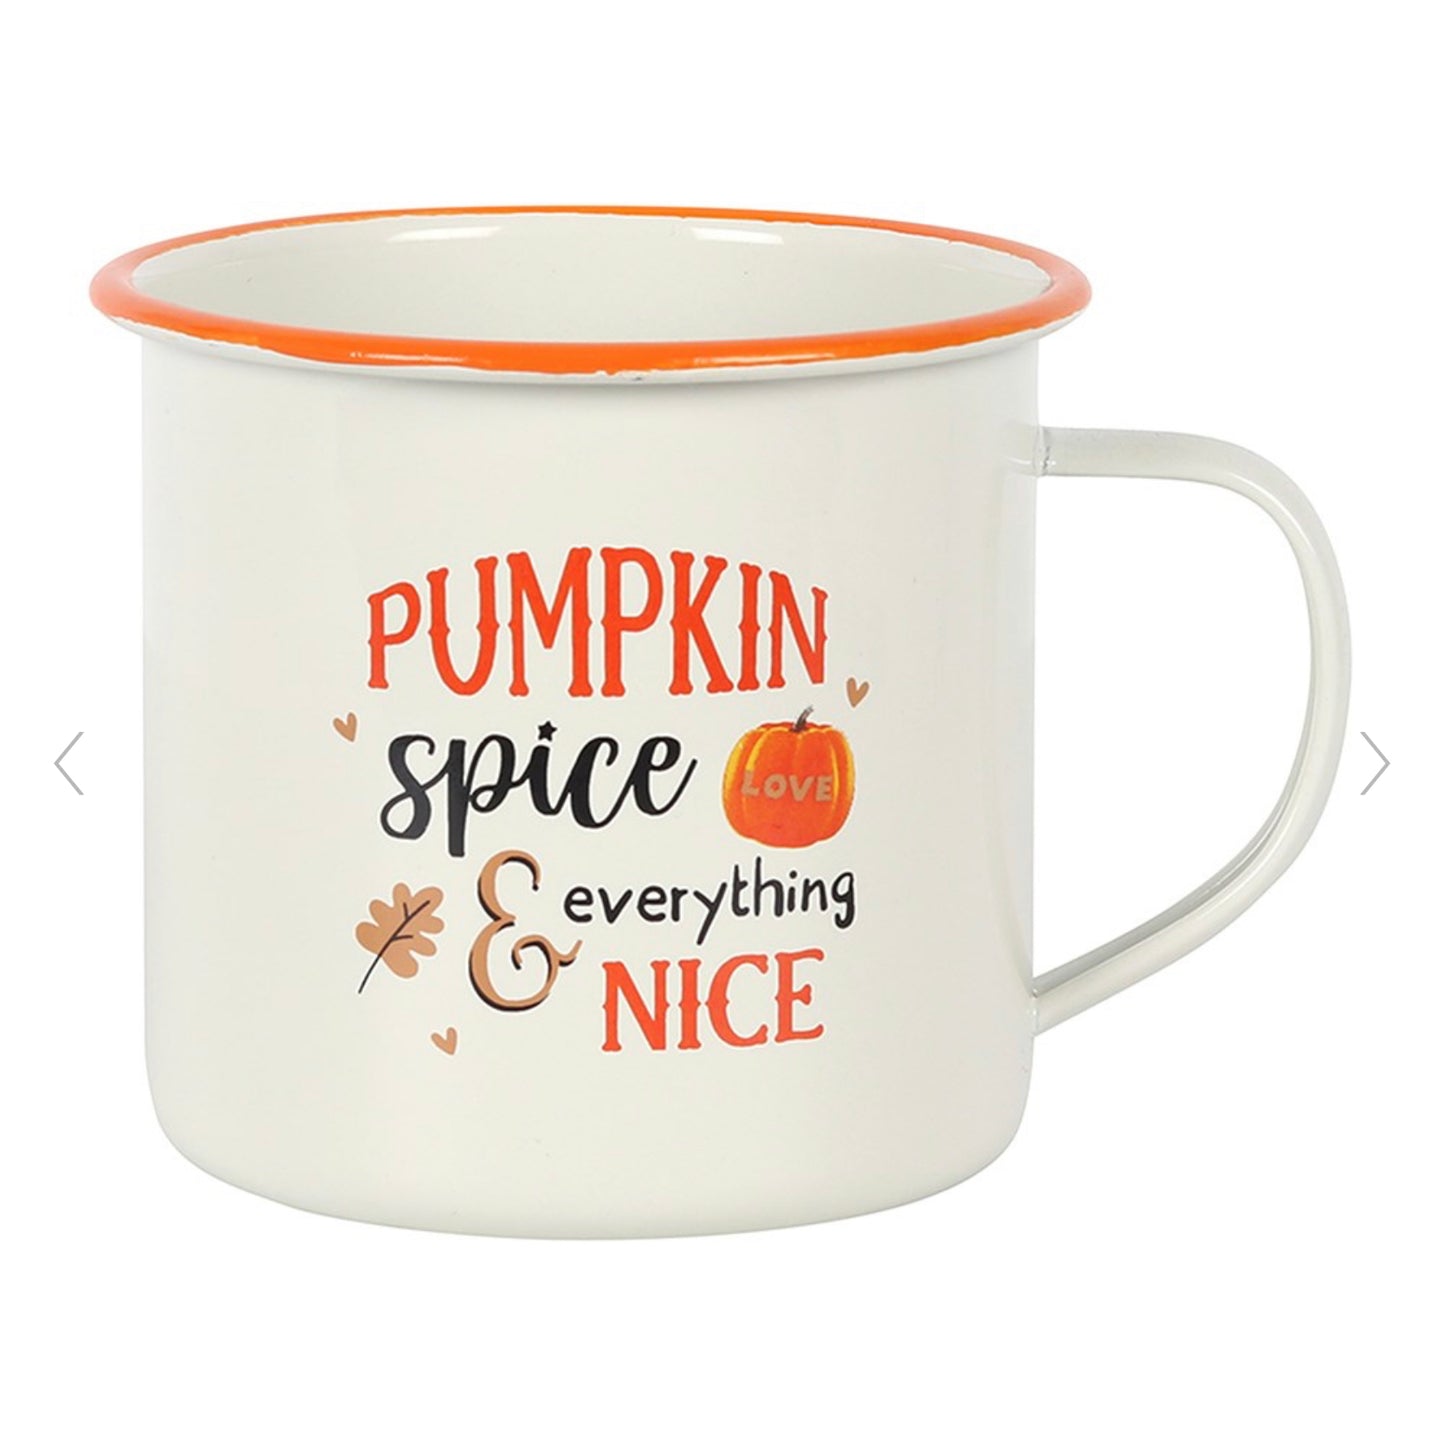 Pumpkin Spice & Everything Nice Enamel Mug